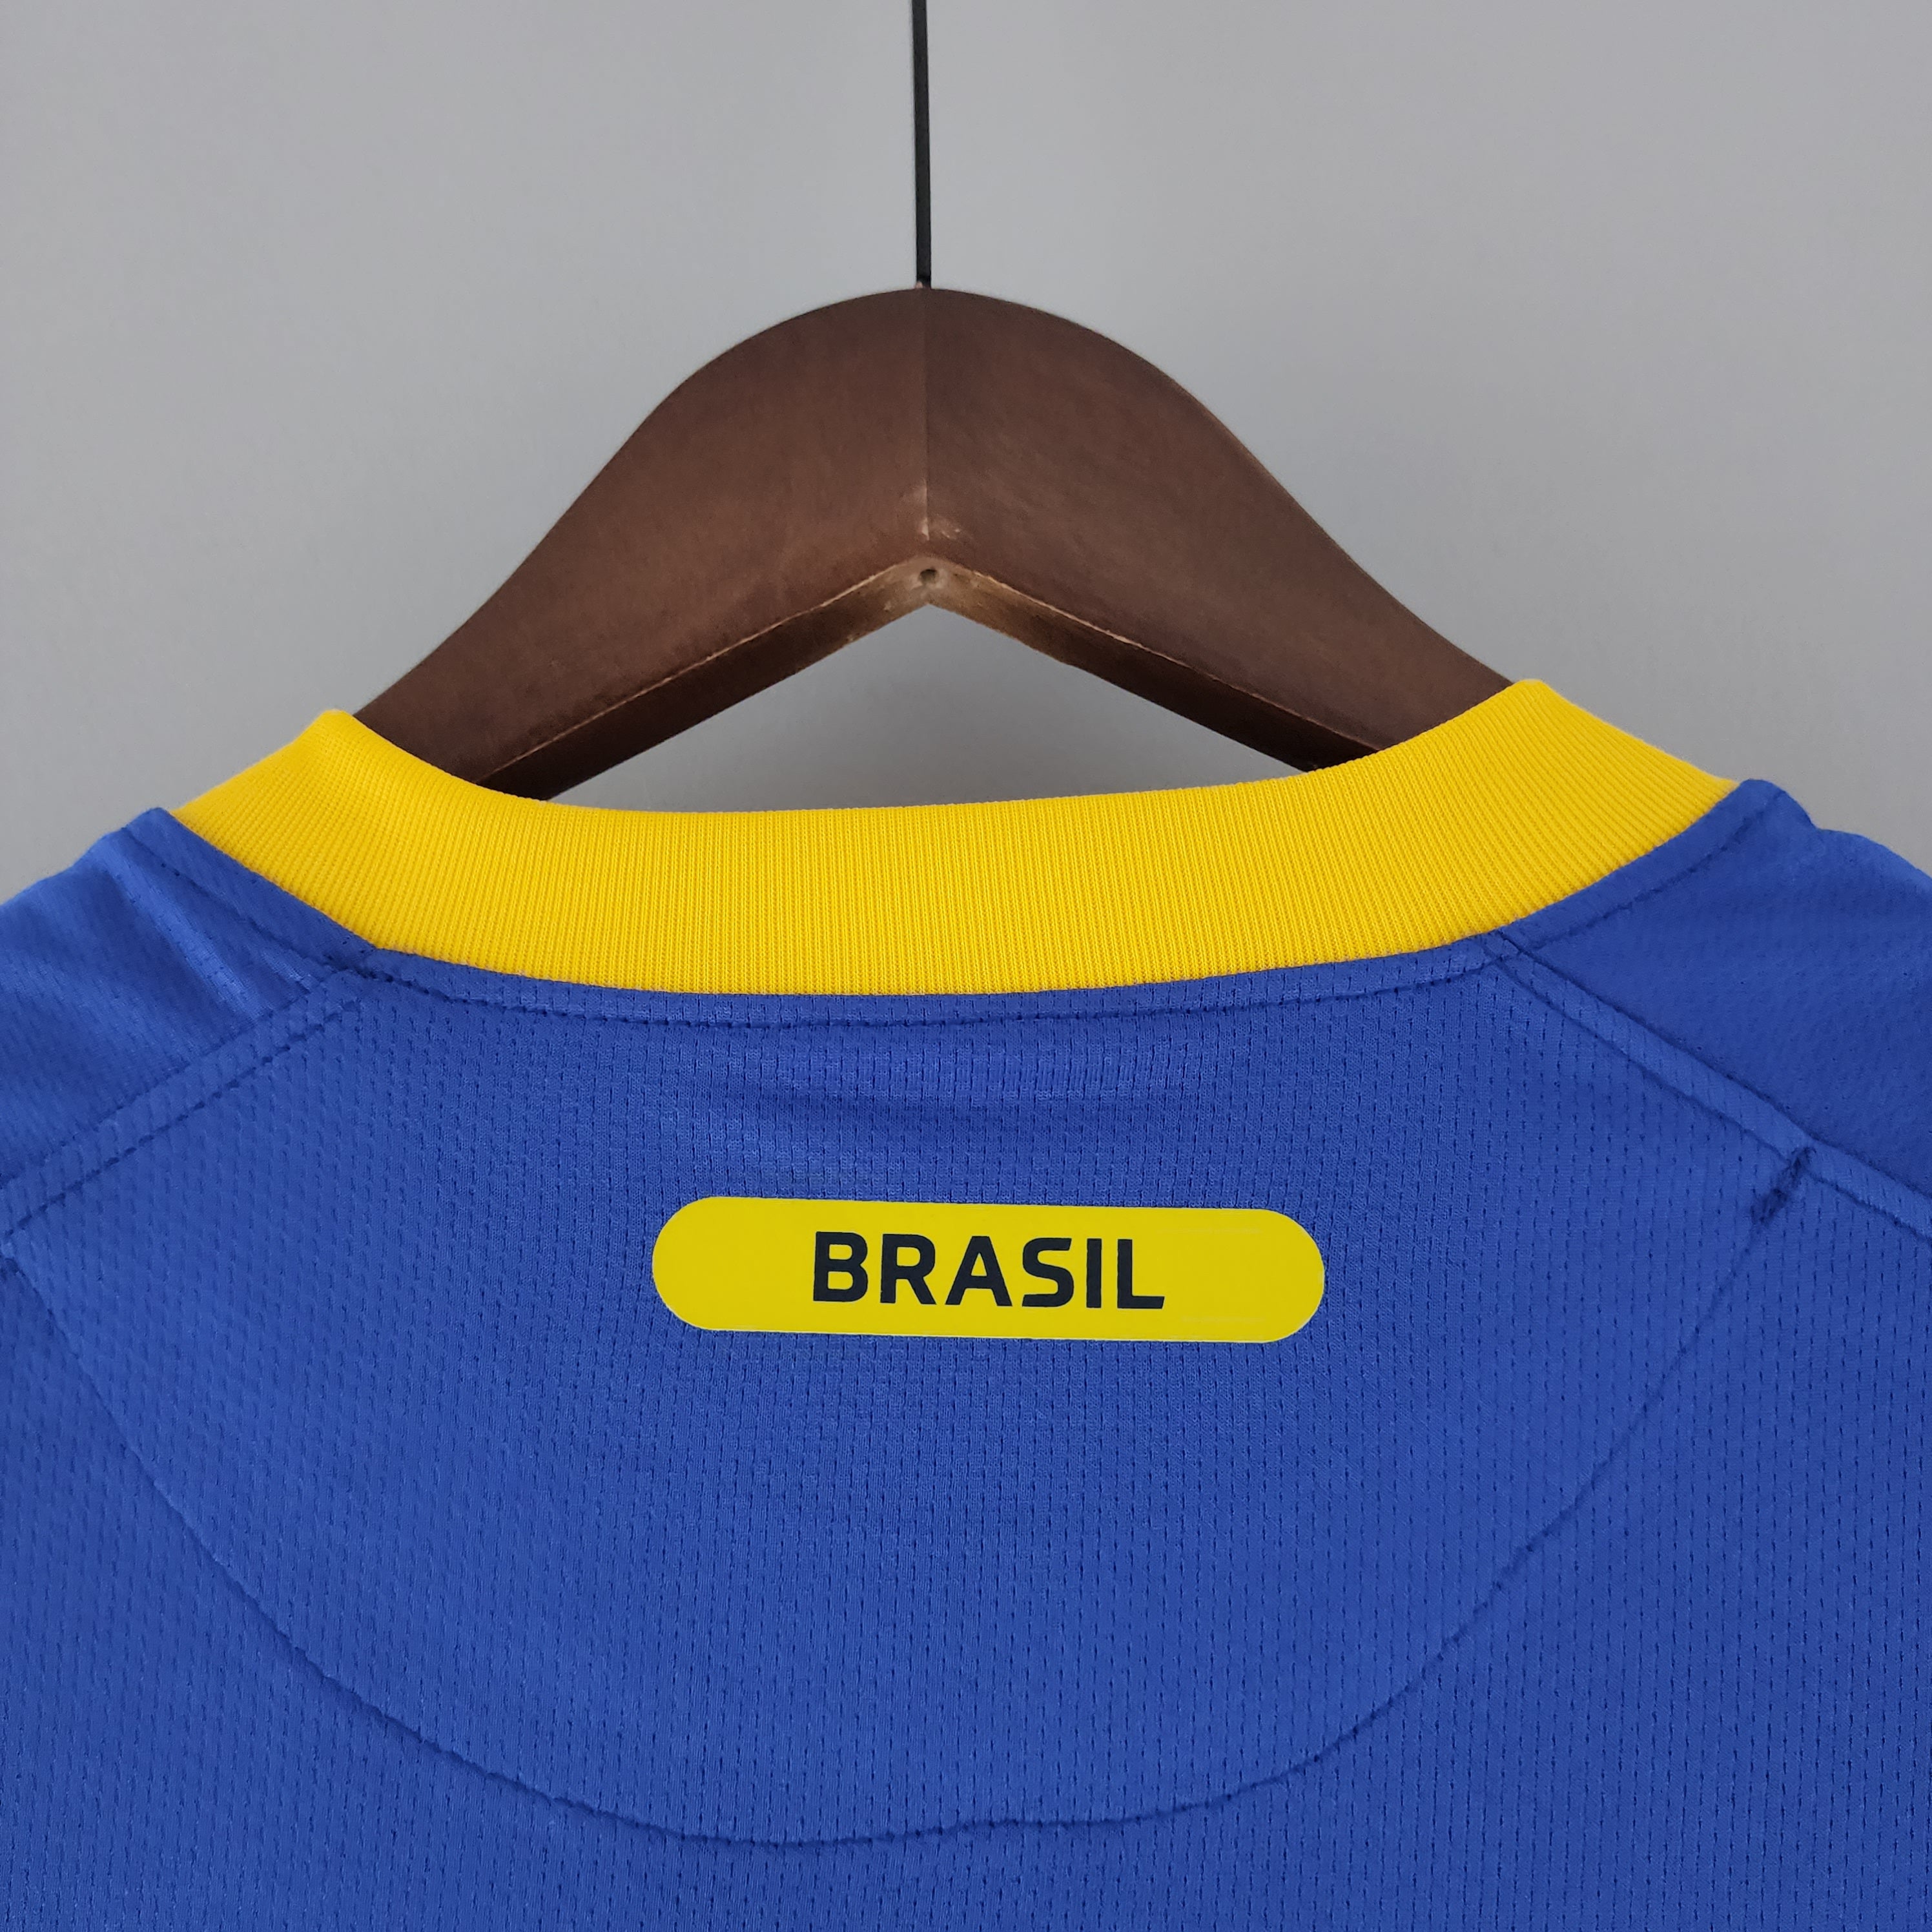 Brasile - 2010 Vintage